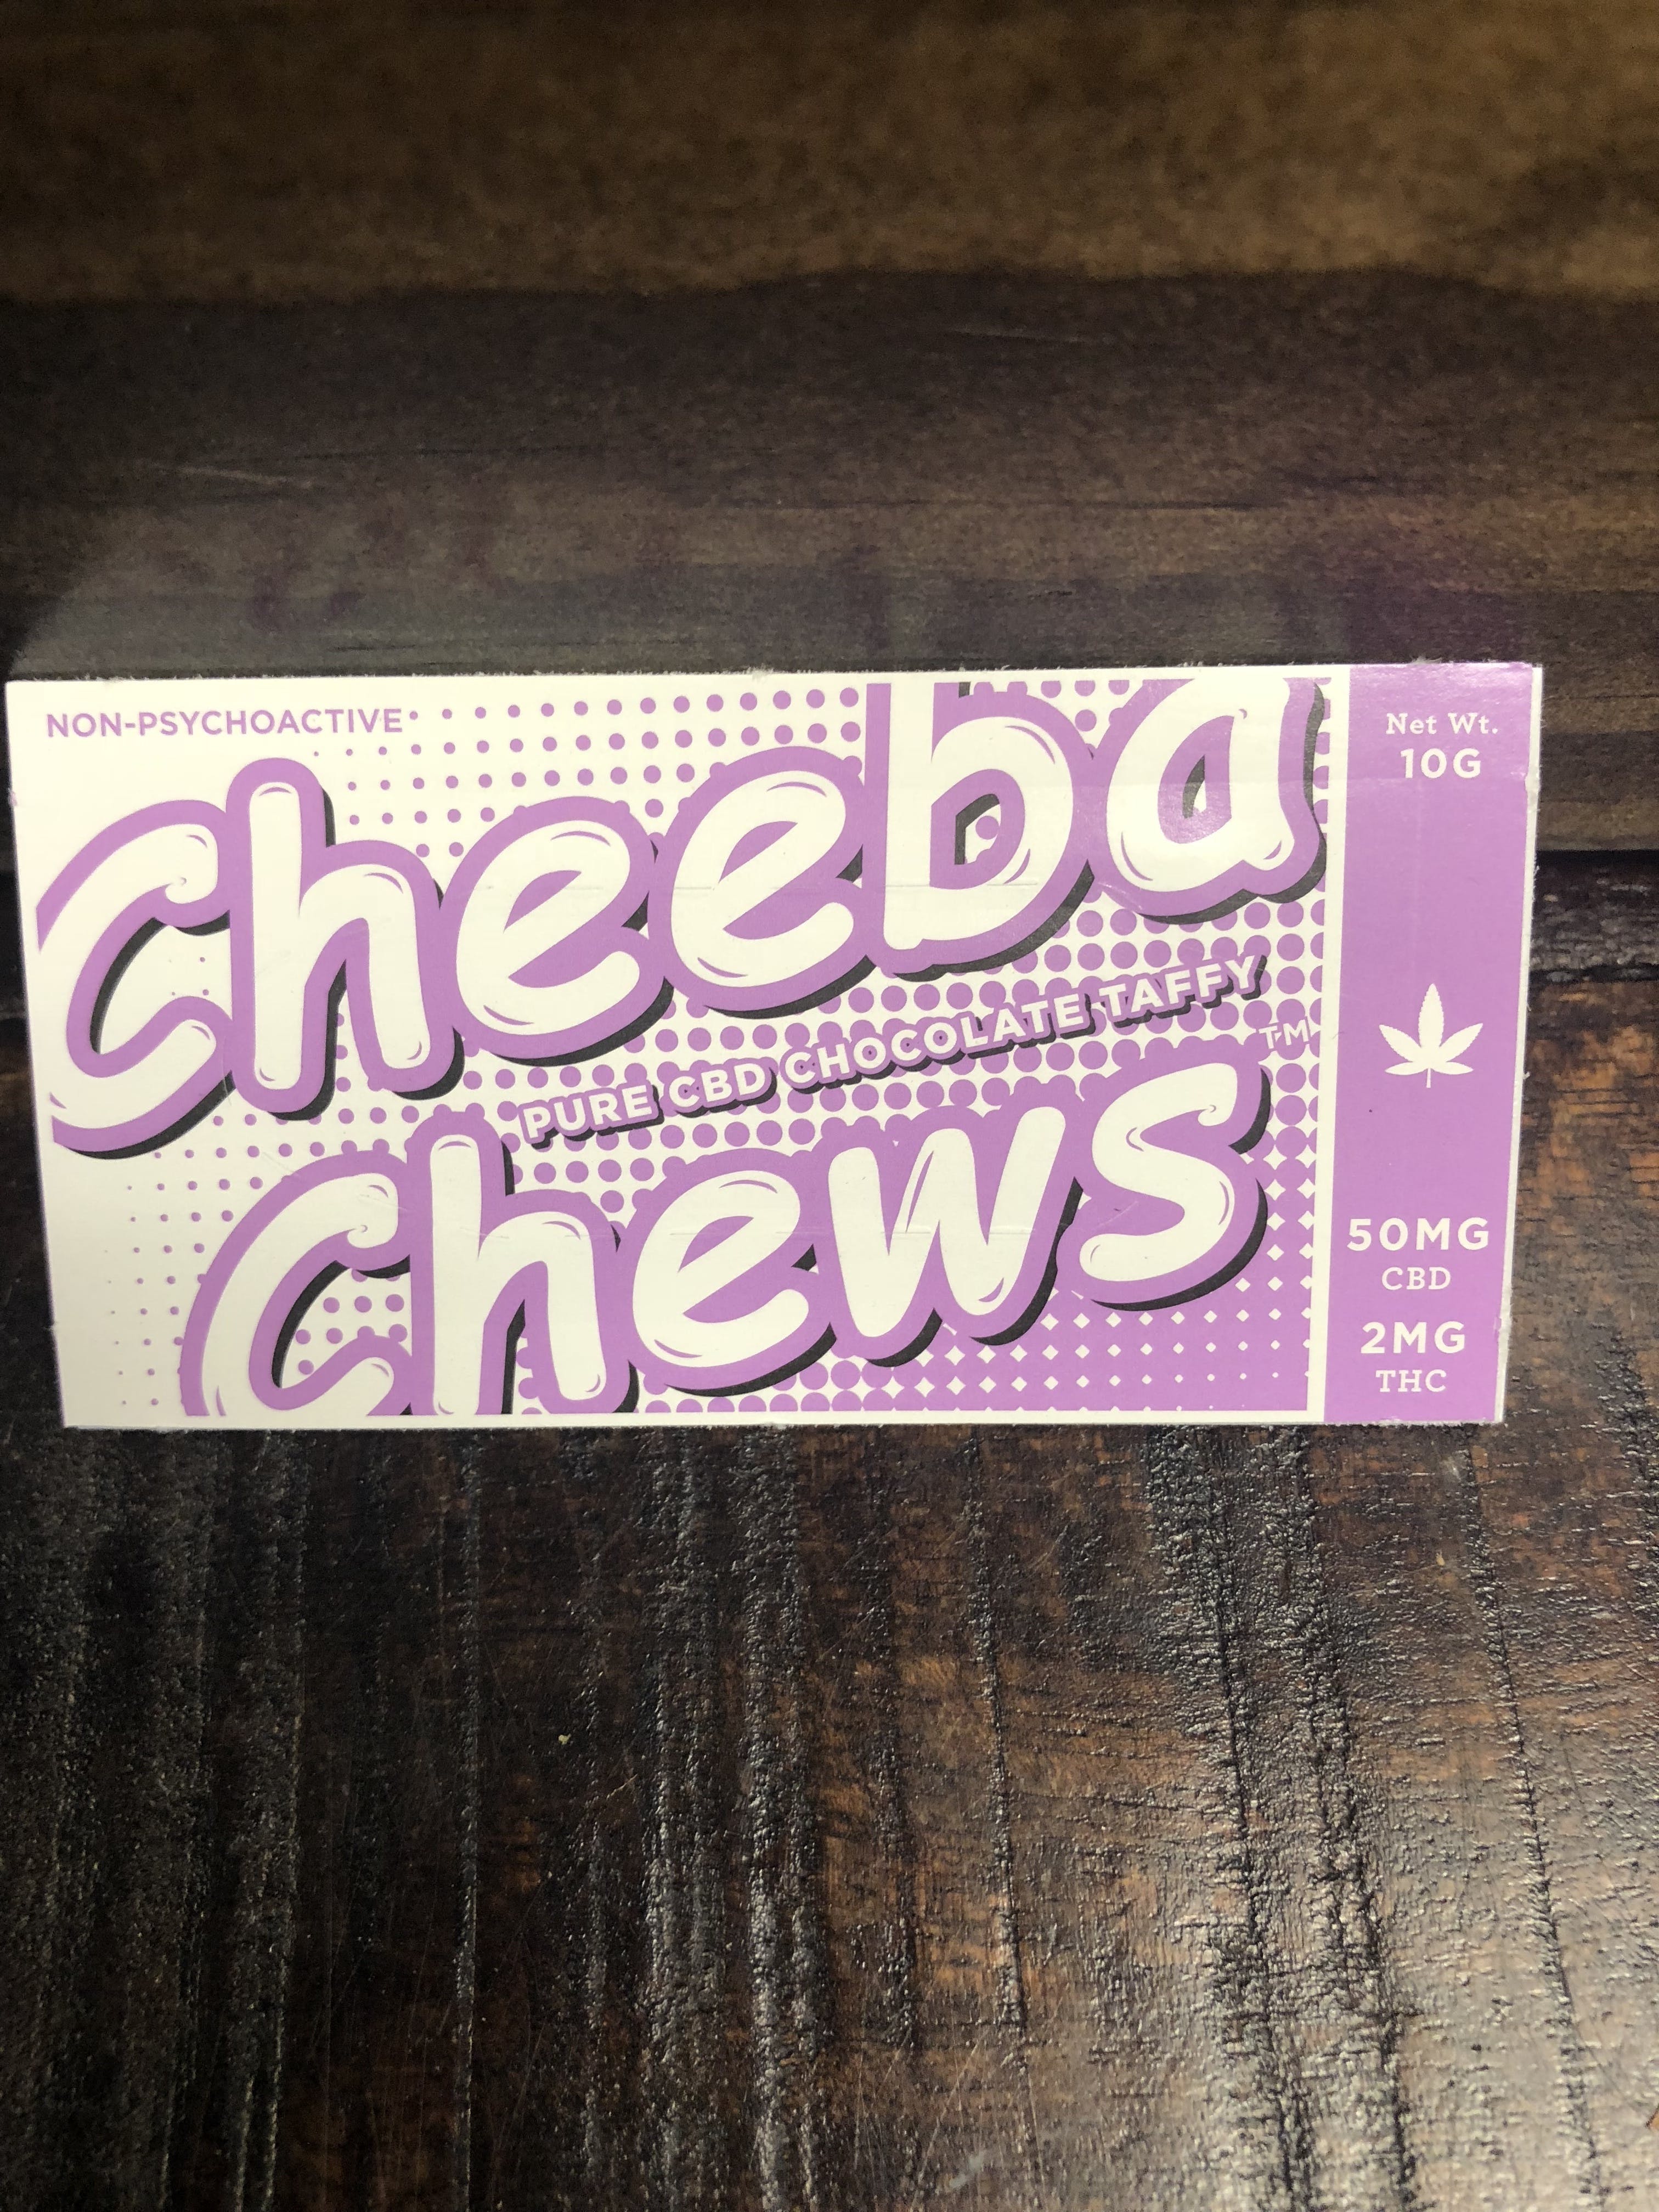 edible-med-cbd-cheeba-chew-50mg